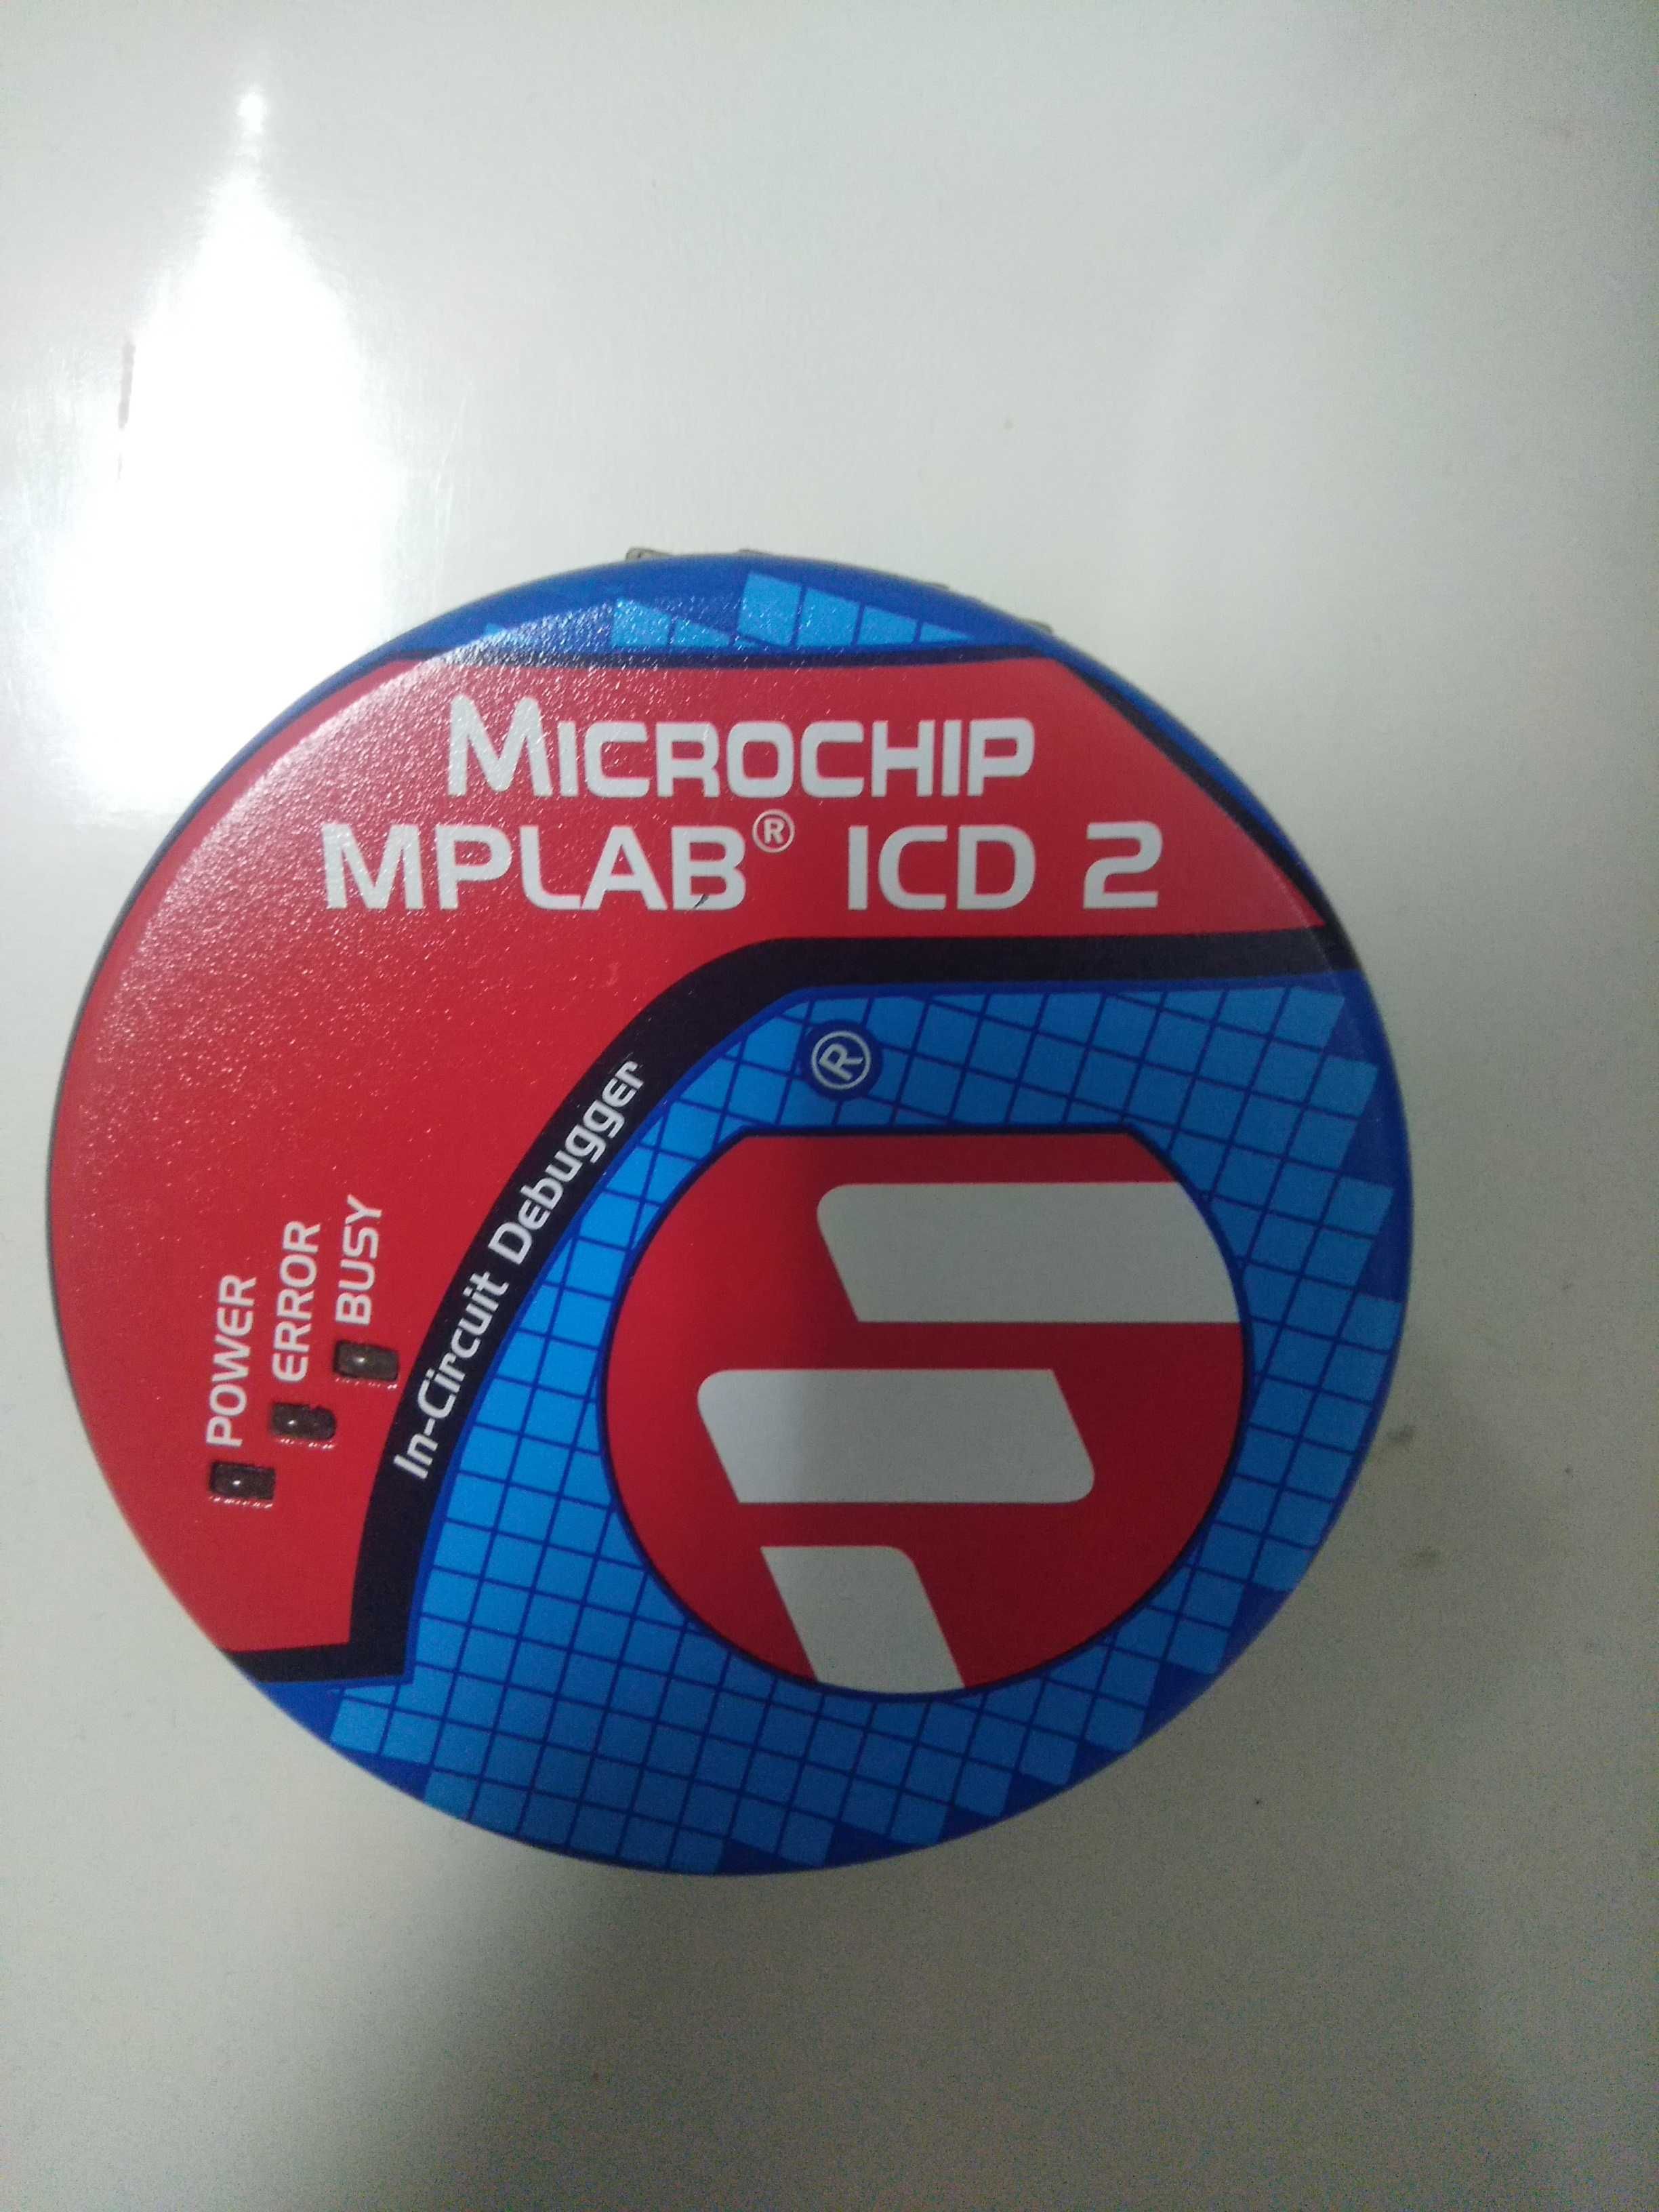 Placa PICDEM 2 Plus + Programador MPLAB ICD 2 + PICDEM Mechatronics